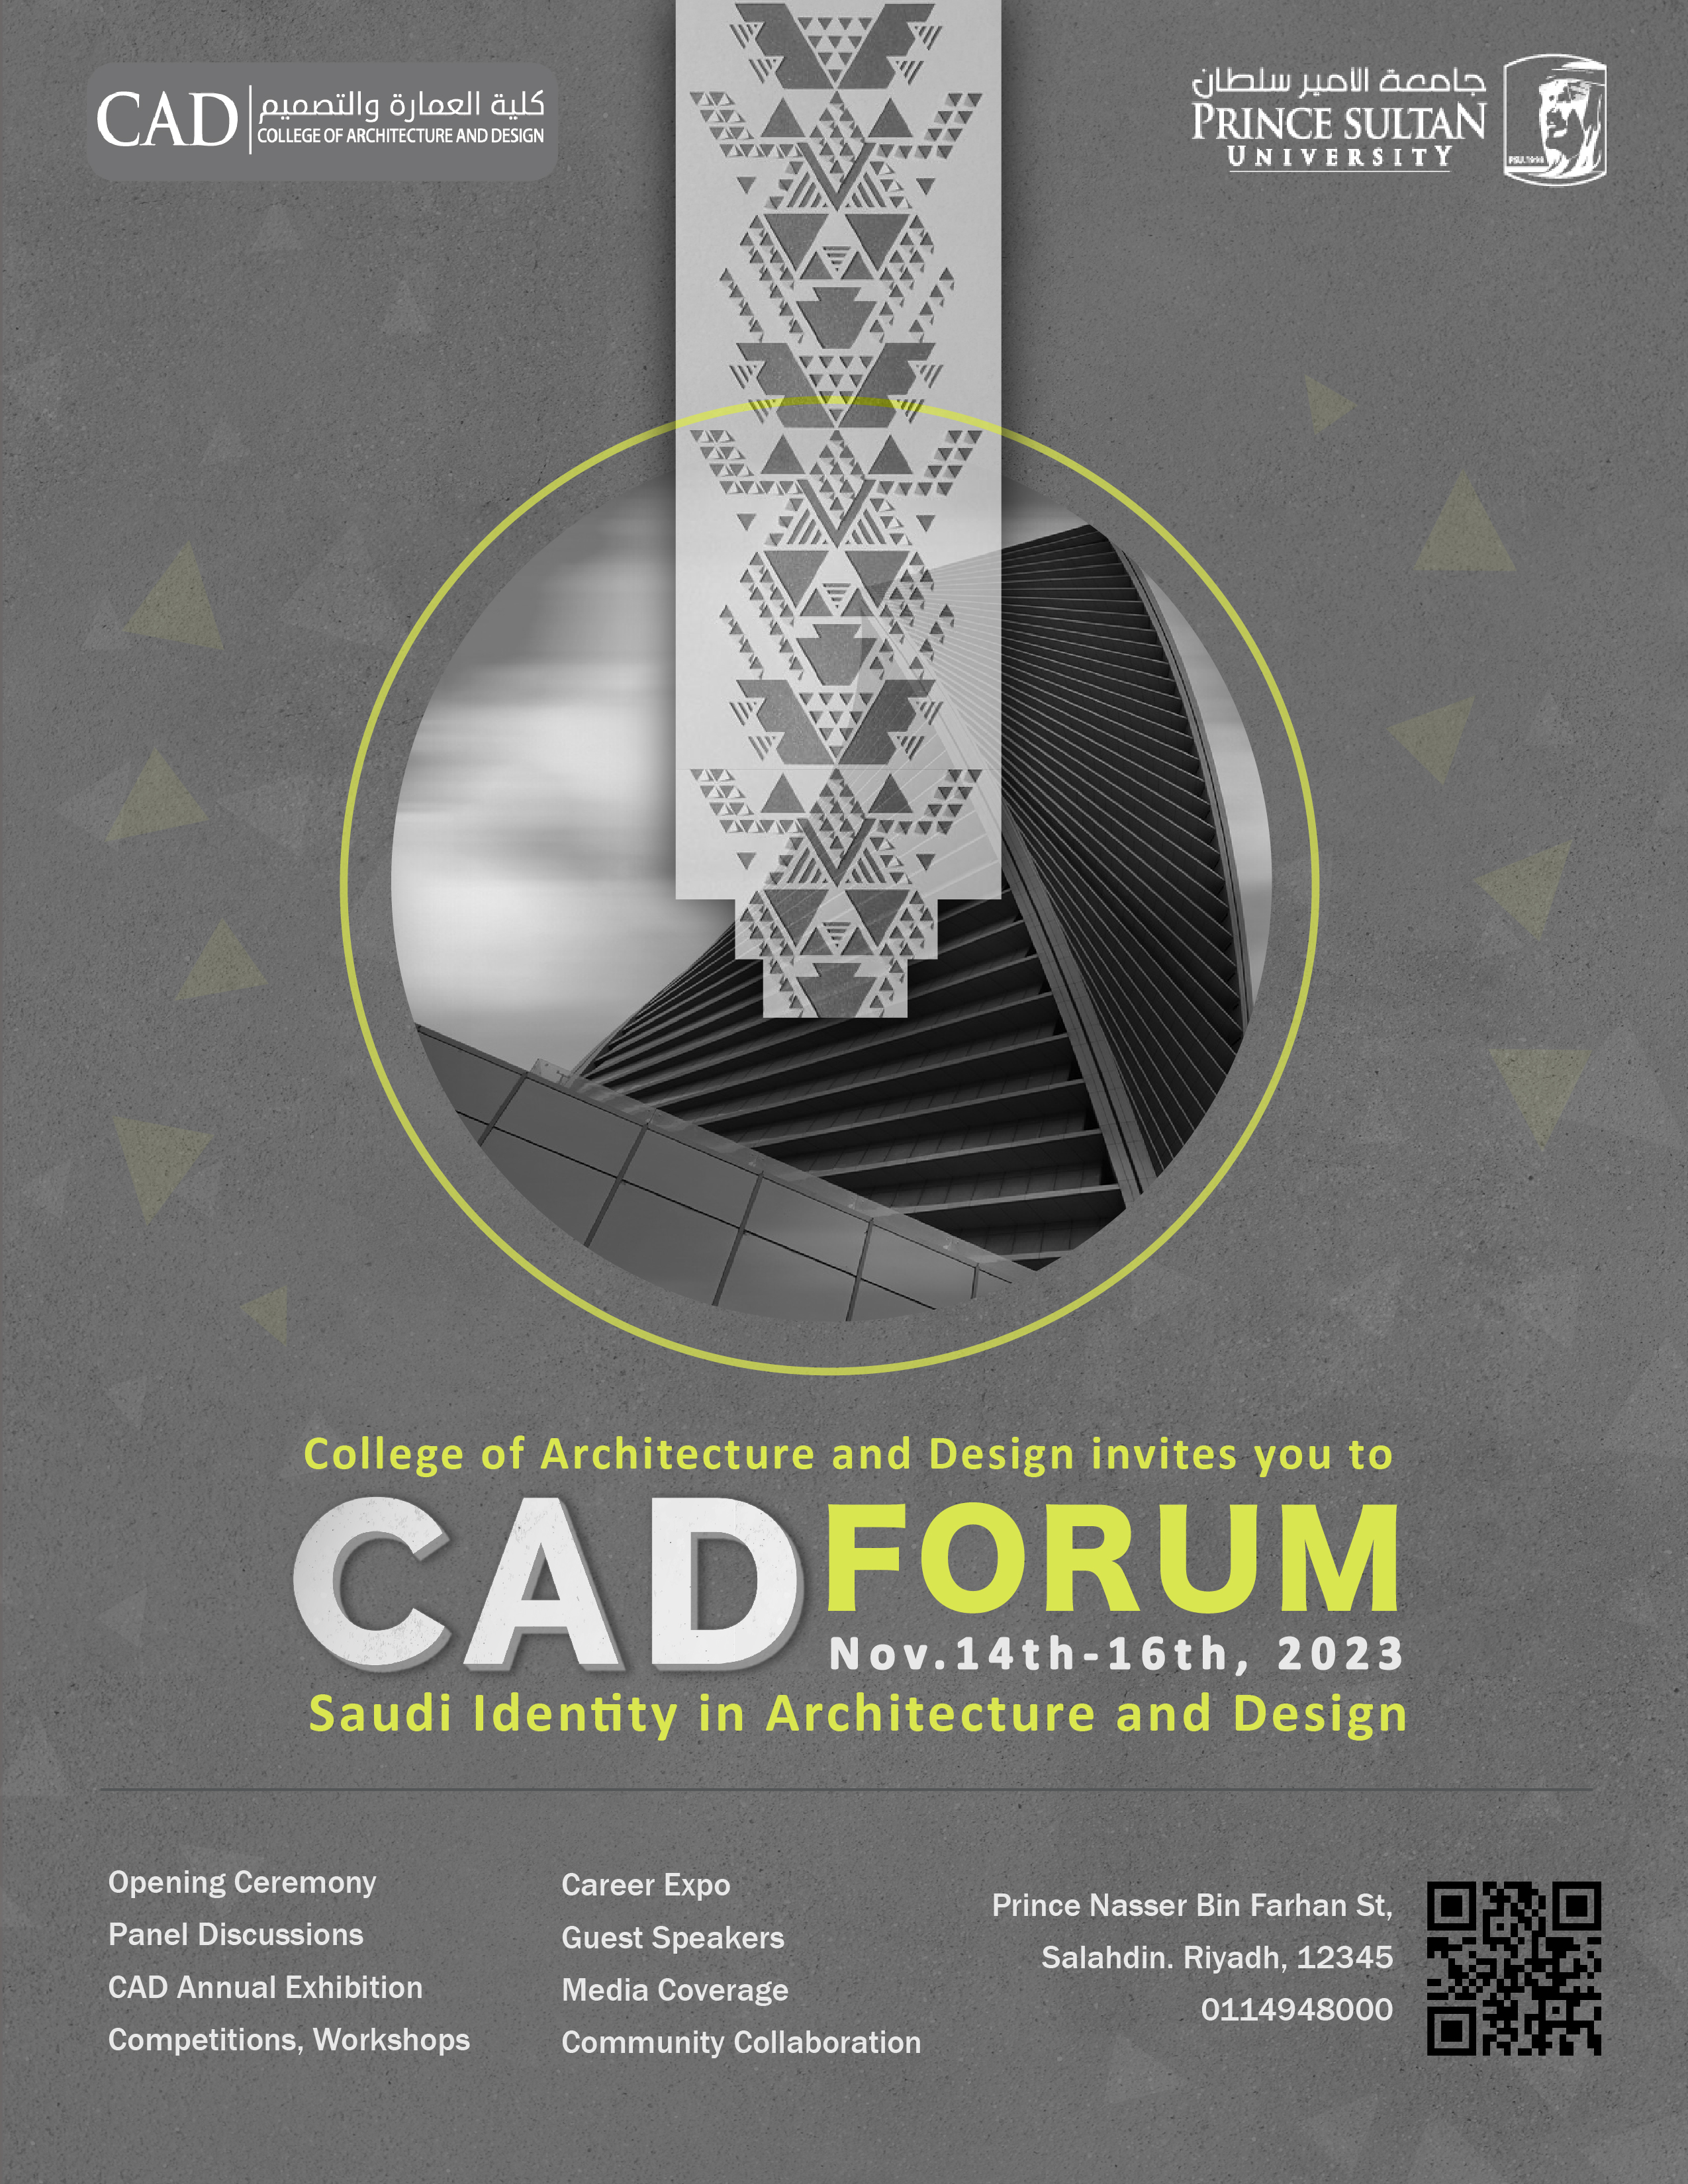 College of Architecture and Design (CAD) FORUM